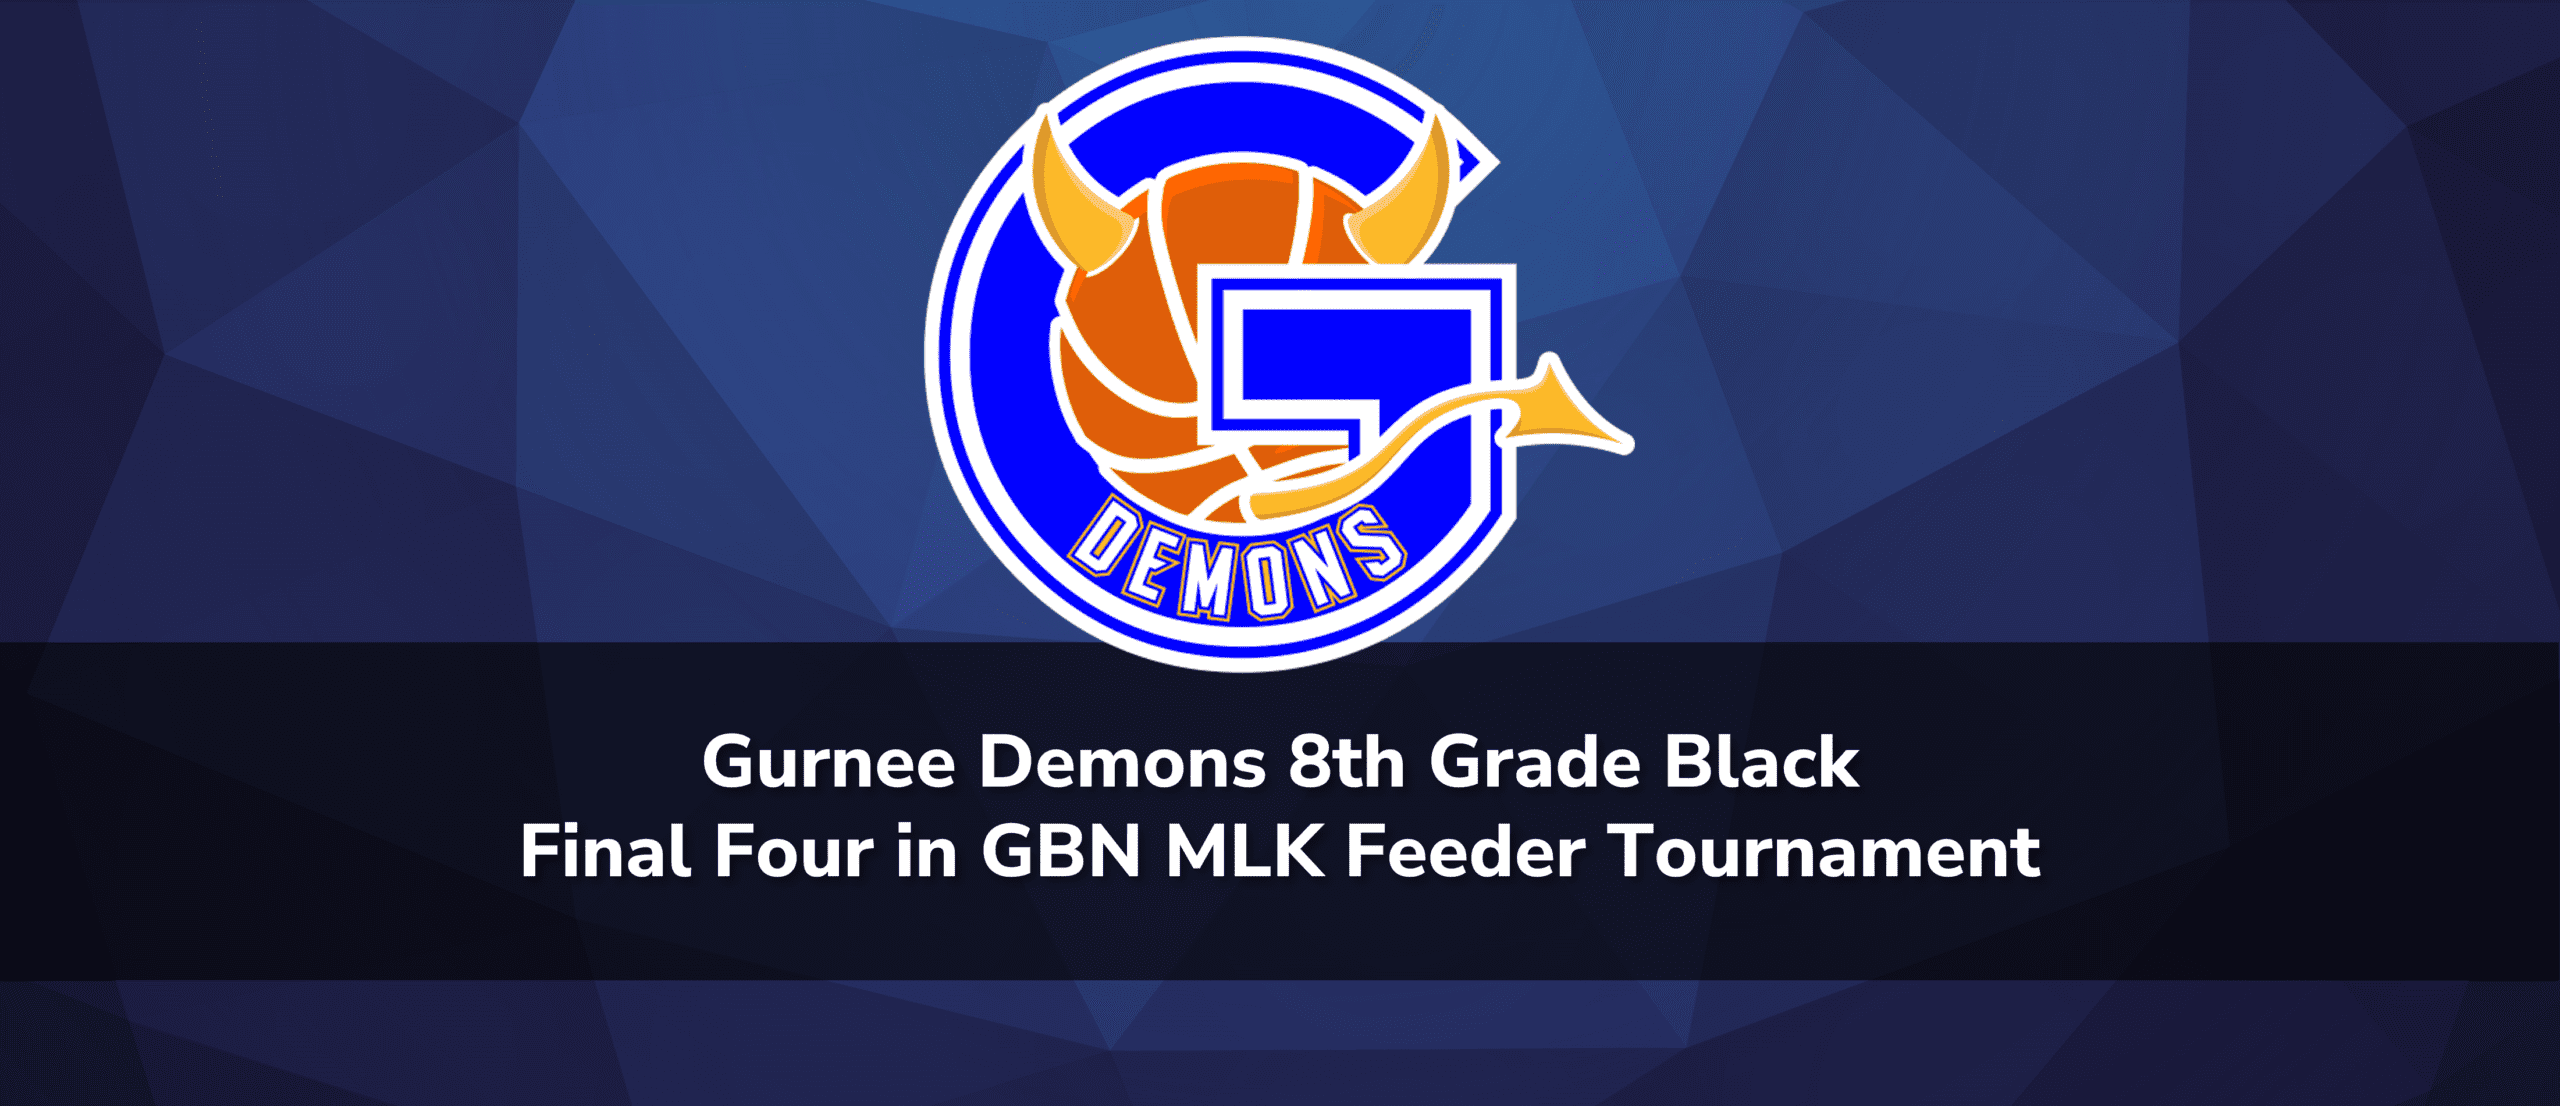 Gurnee Demons 8th Grade Black Final Four in GBN MLK Feeder Tournament